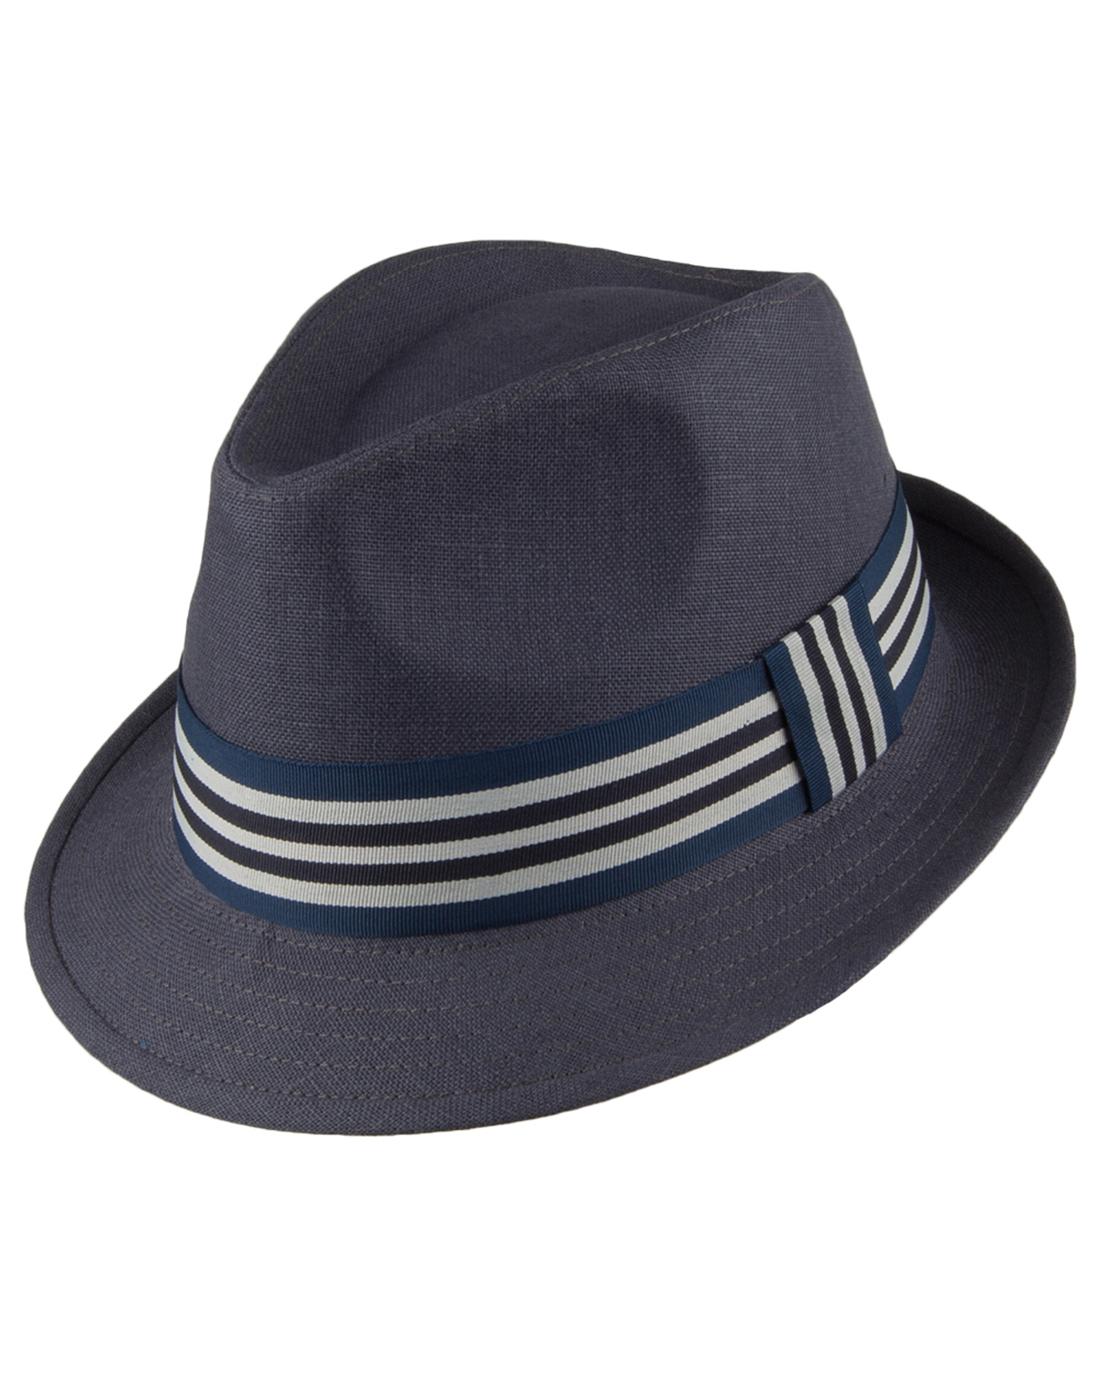 FAILSWORTH Retro Irish Linen Summer Trilby Hat 